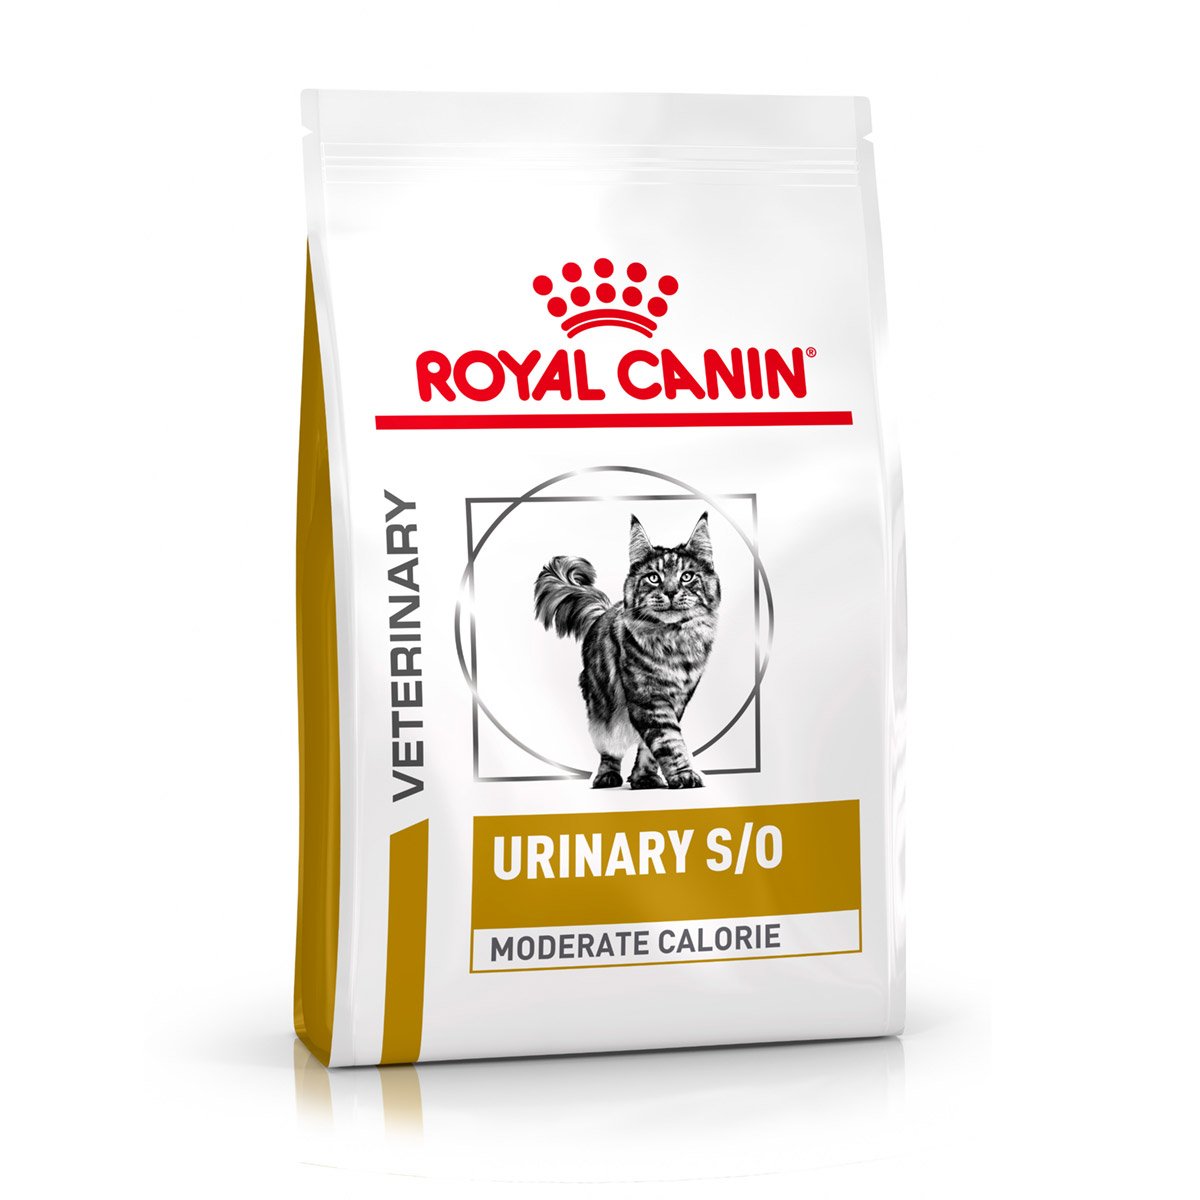 ROYAL CANIN® Veterinary URINARY S/O MODERATE CALORIE Trockenfutter für Katzen 3,5kg von Royal Canin